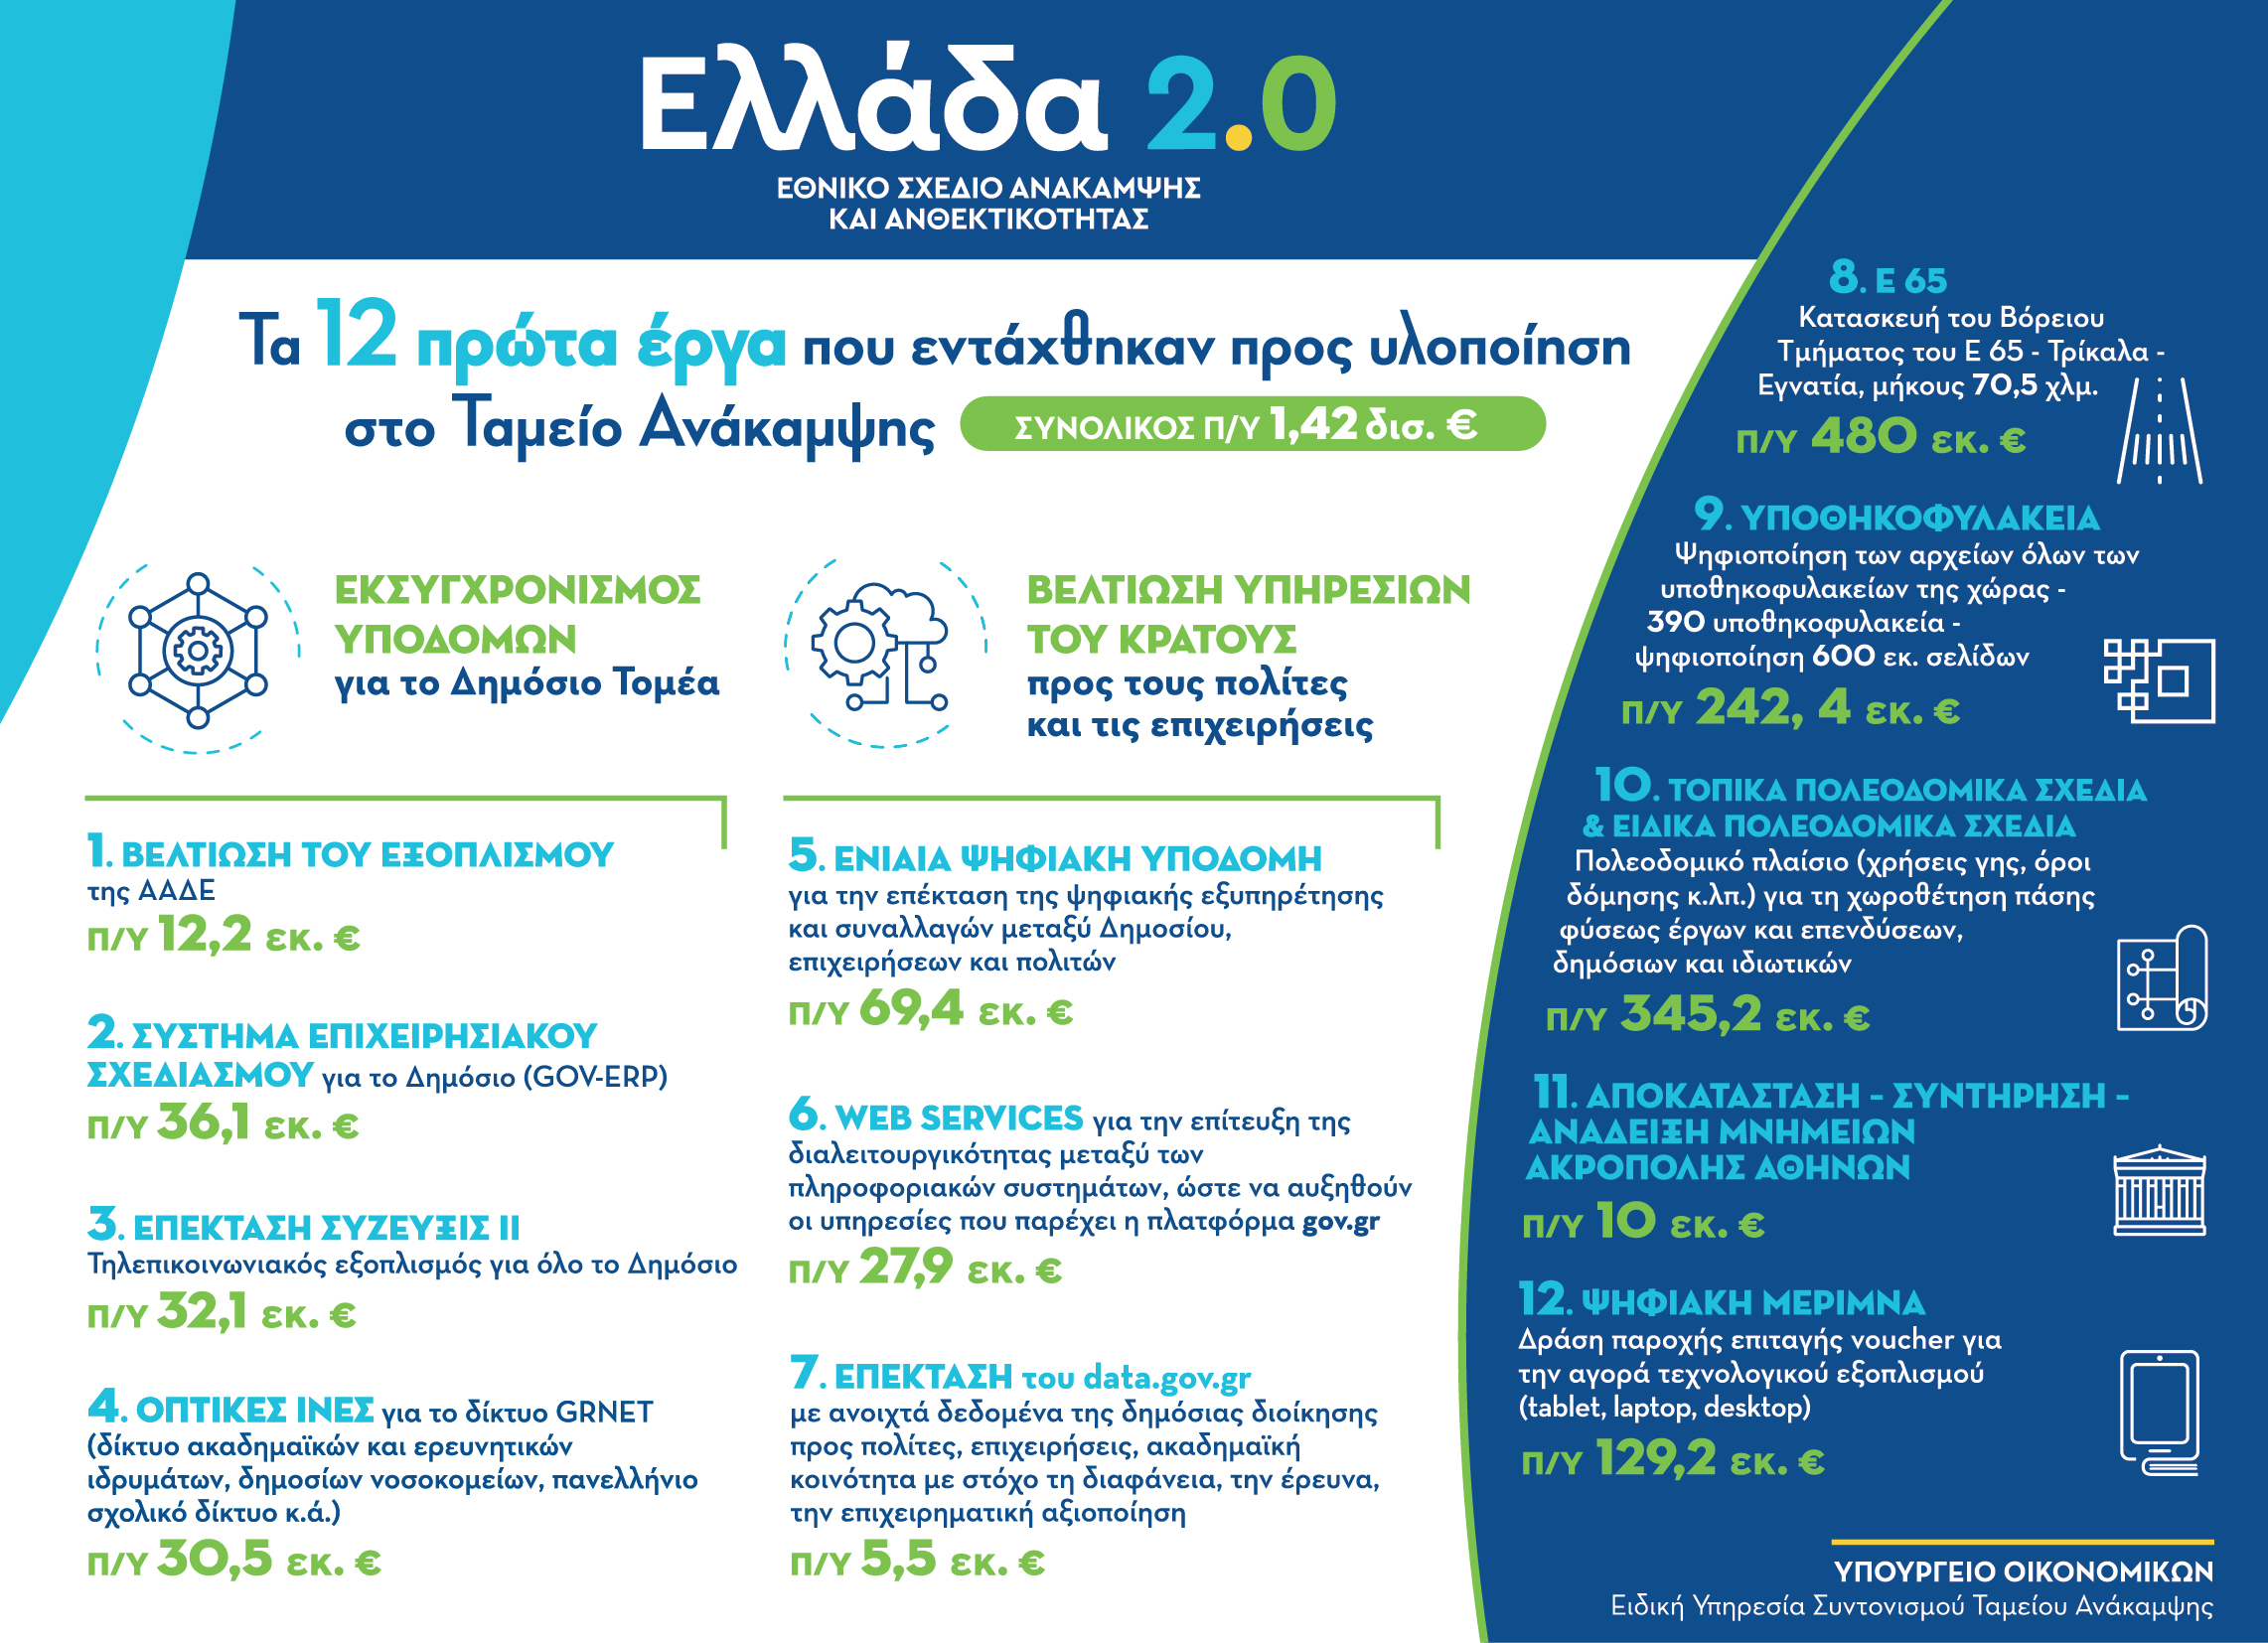 Tα πρώτα 12 έργα 1,4 δισ. ευρώ του «Ελλάδα 2.0»